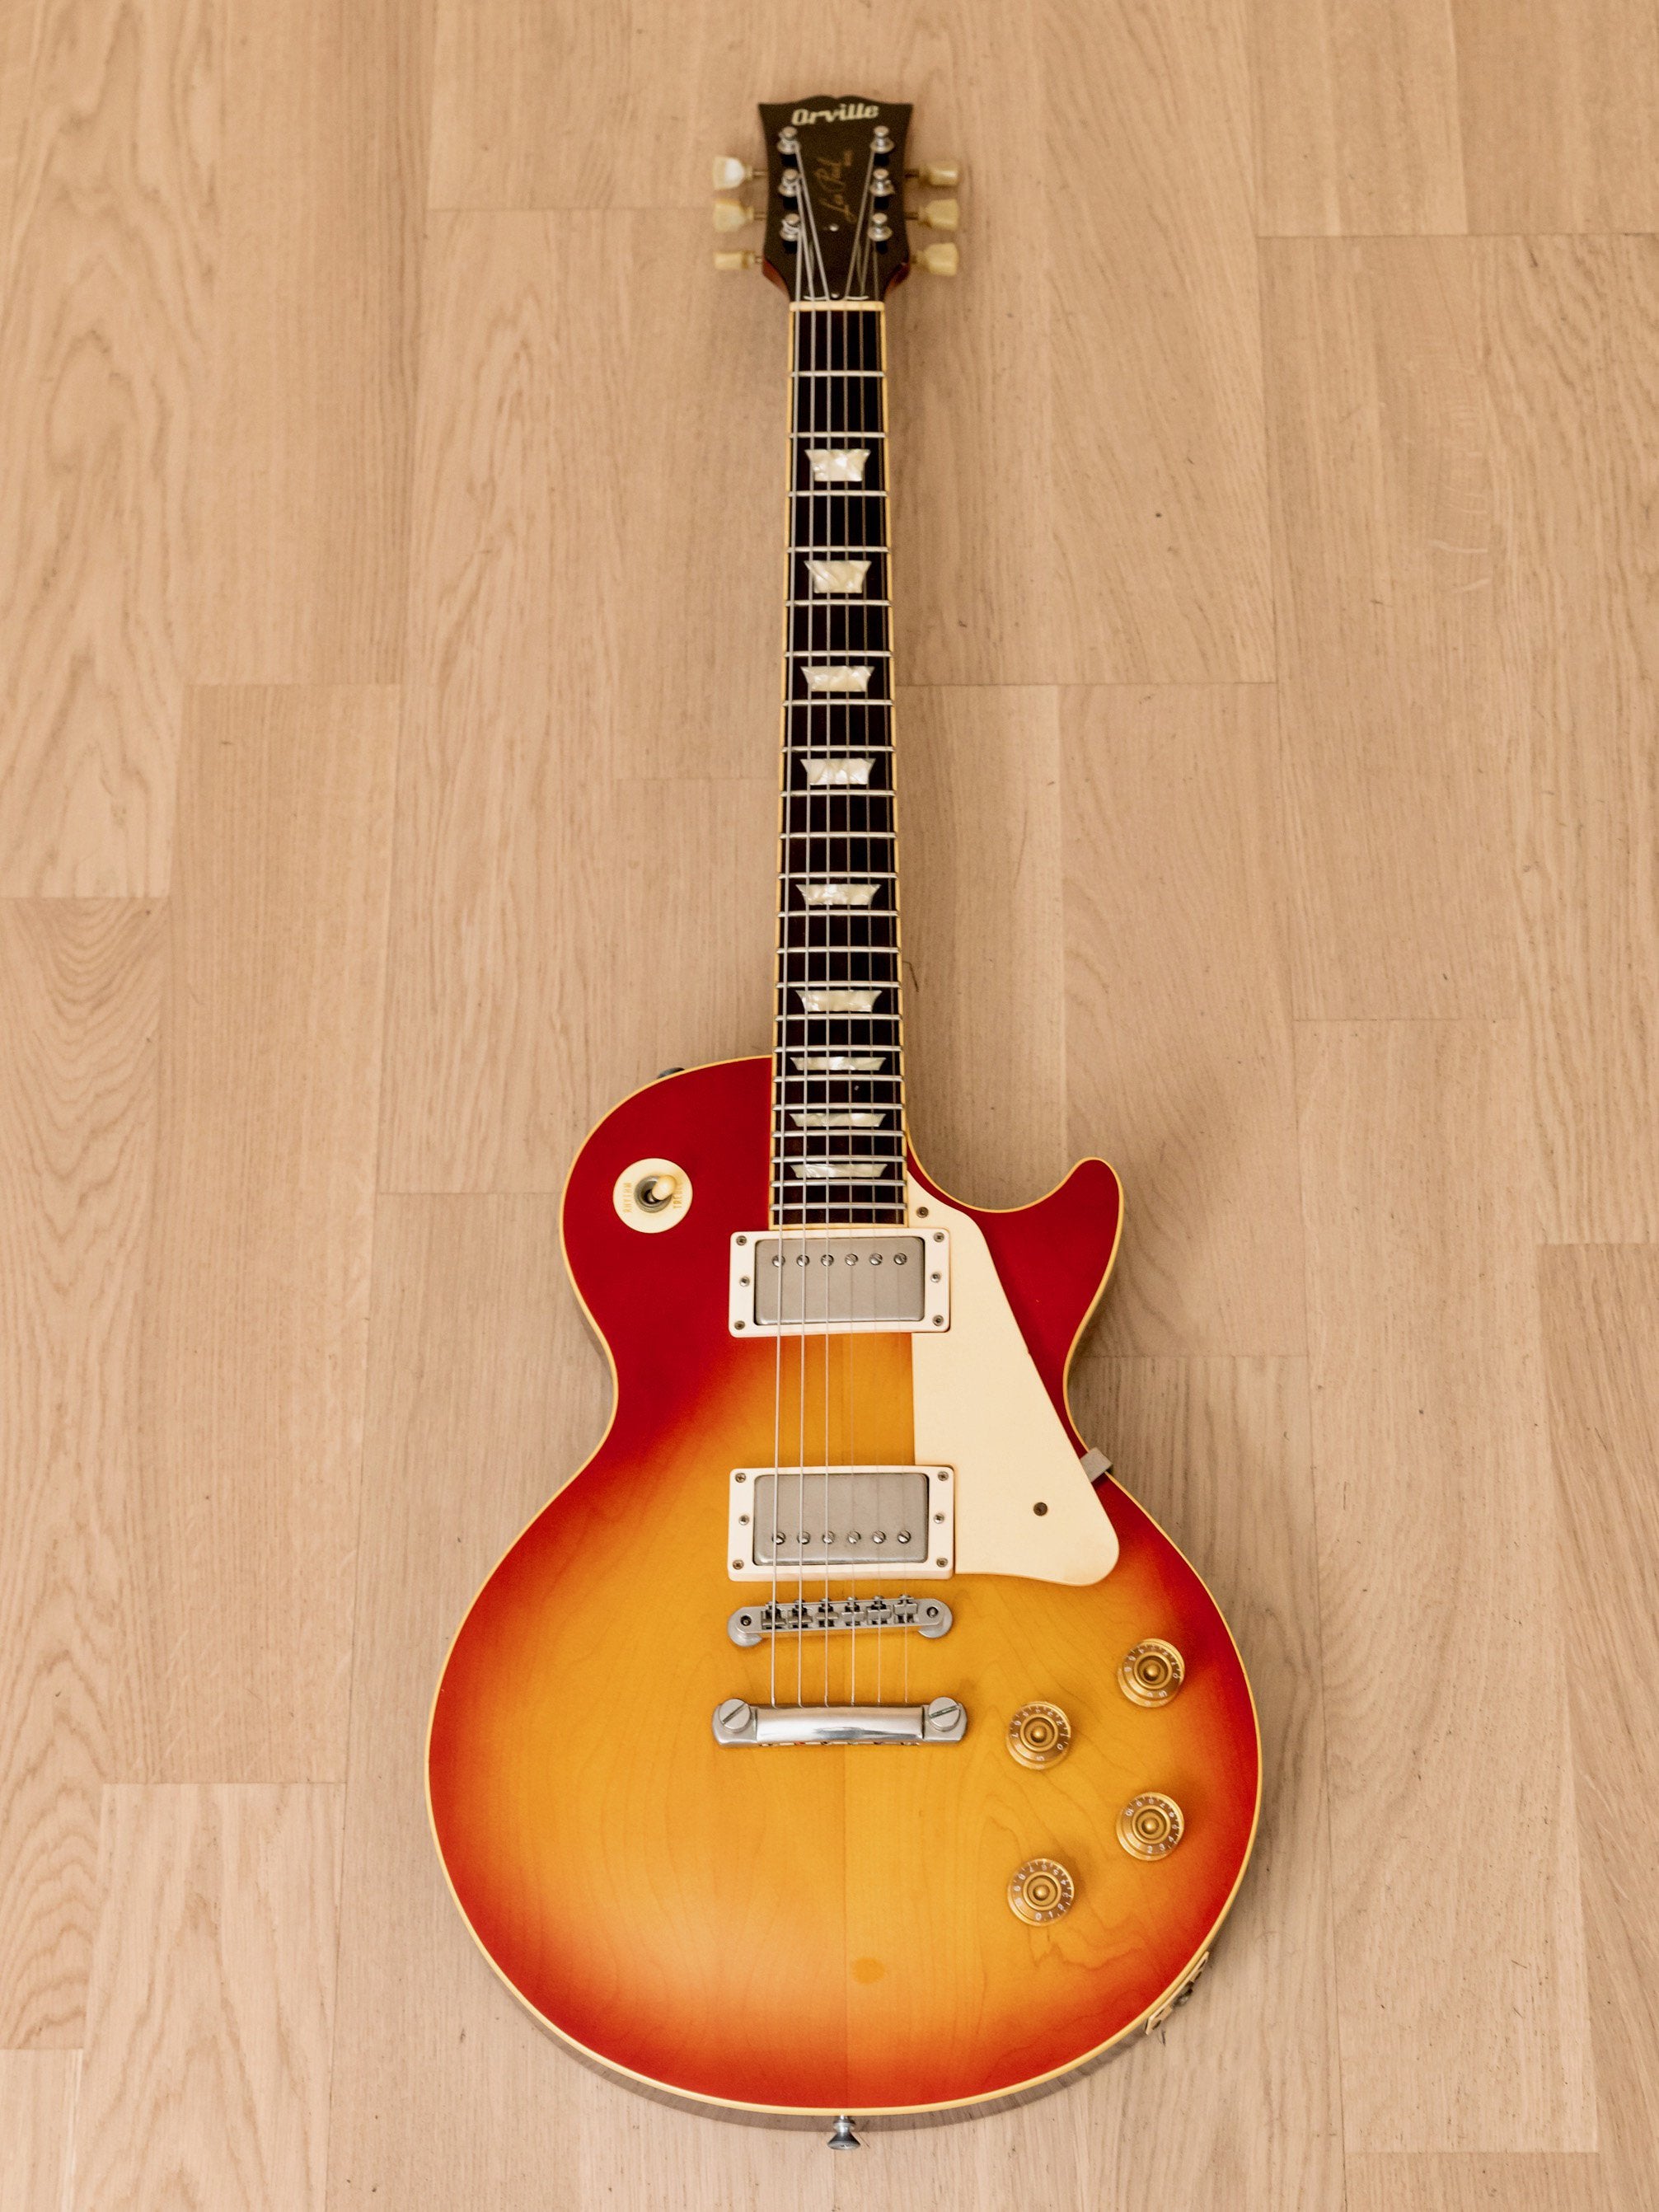 1995 Orville Les Paul Standard LPS-75 Cherry Sunburst, Gibson-Licensed & 100% Original, Japan Fujigen